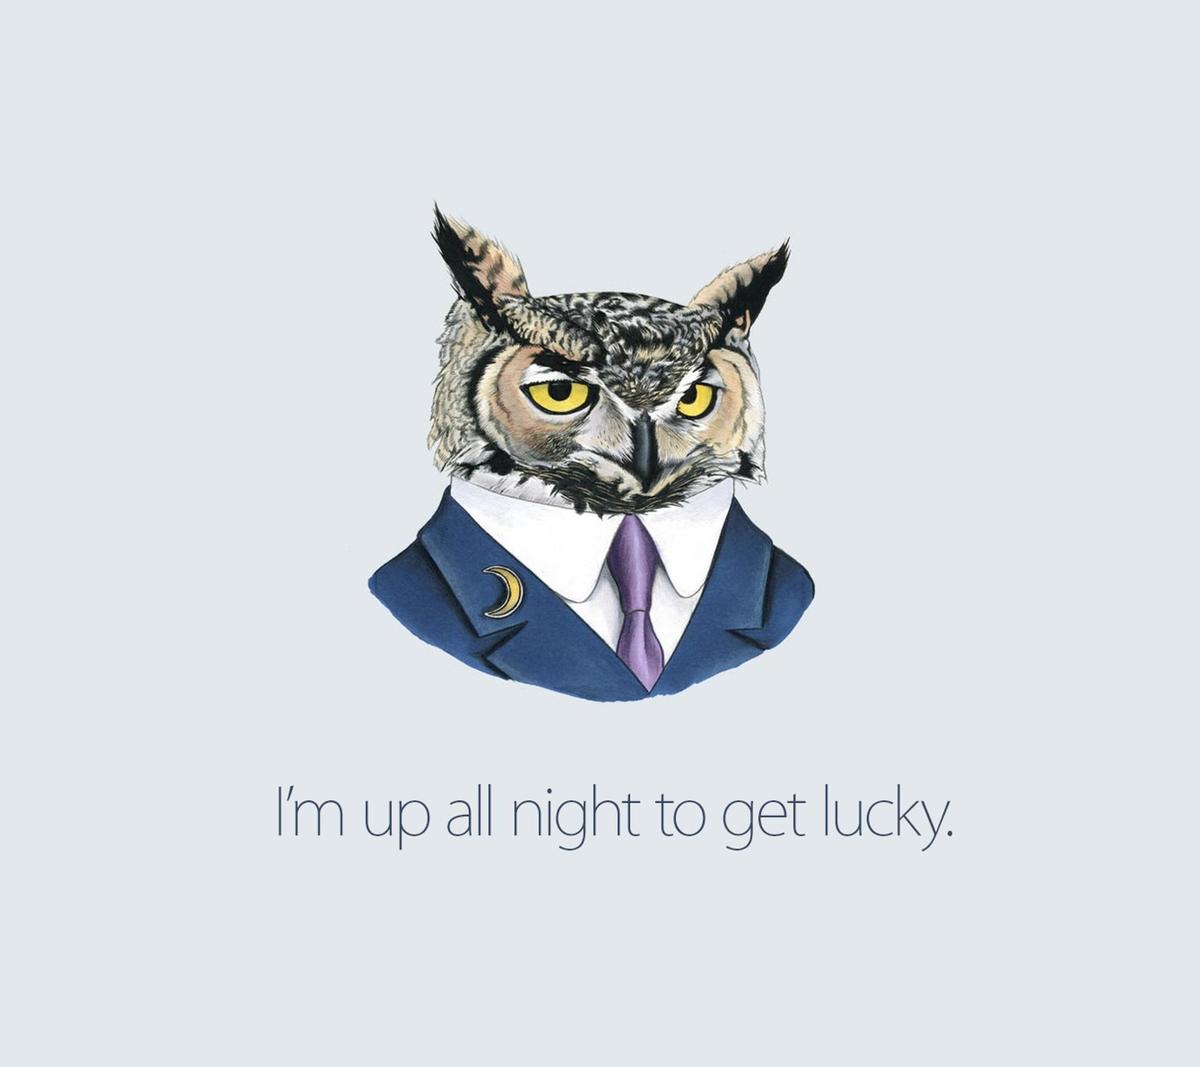 Owl uoallnight